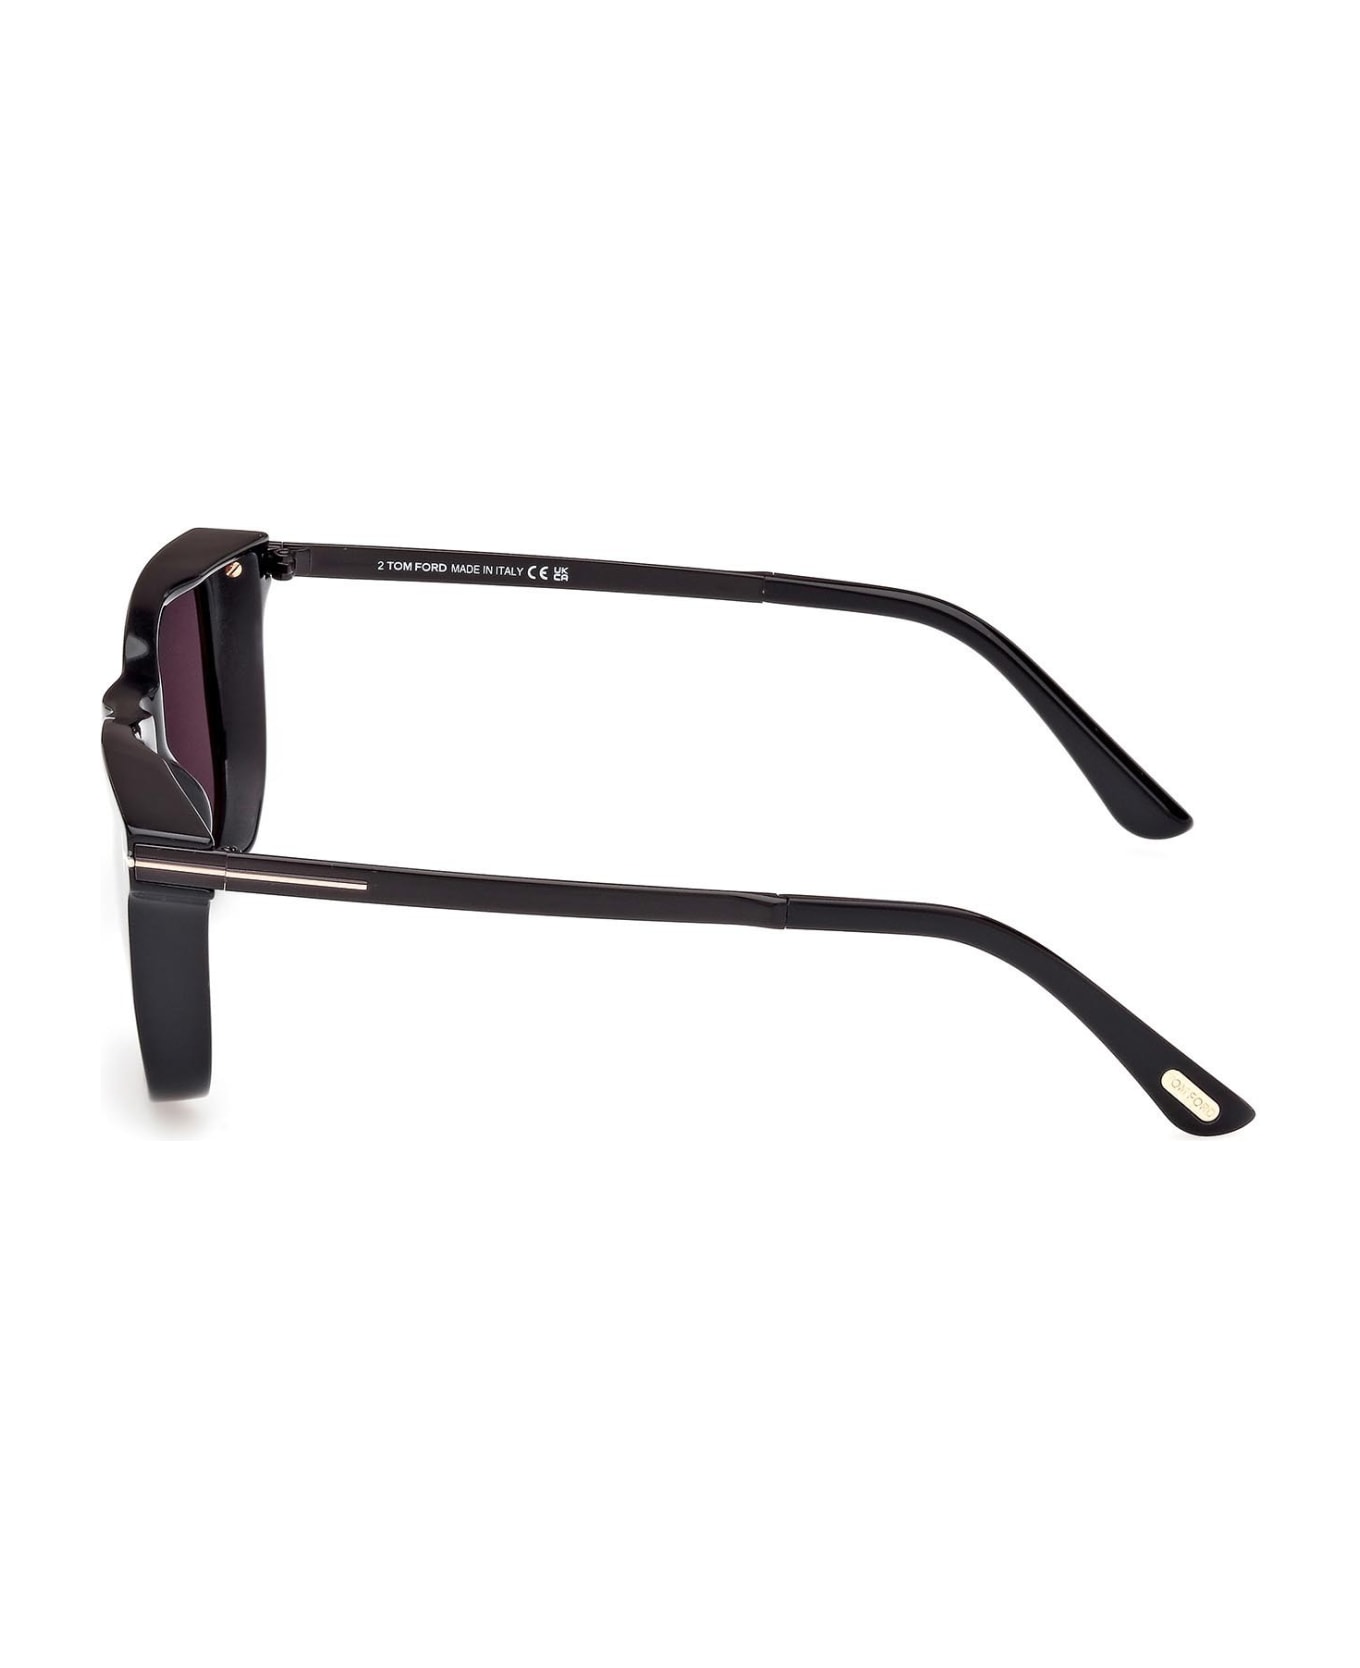 Tom Ford Eyewear Sunglasses - Nero/Grigio